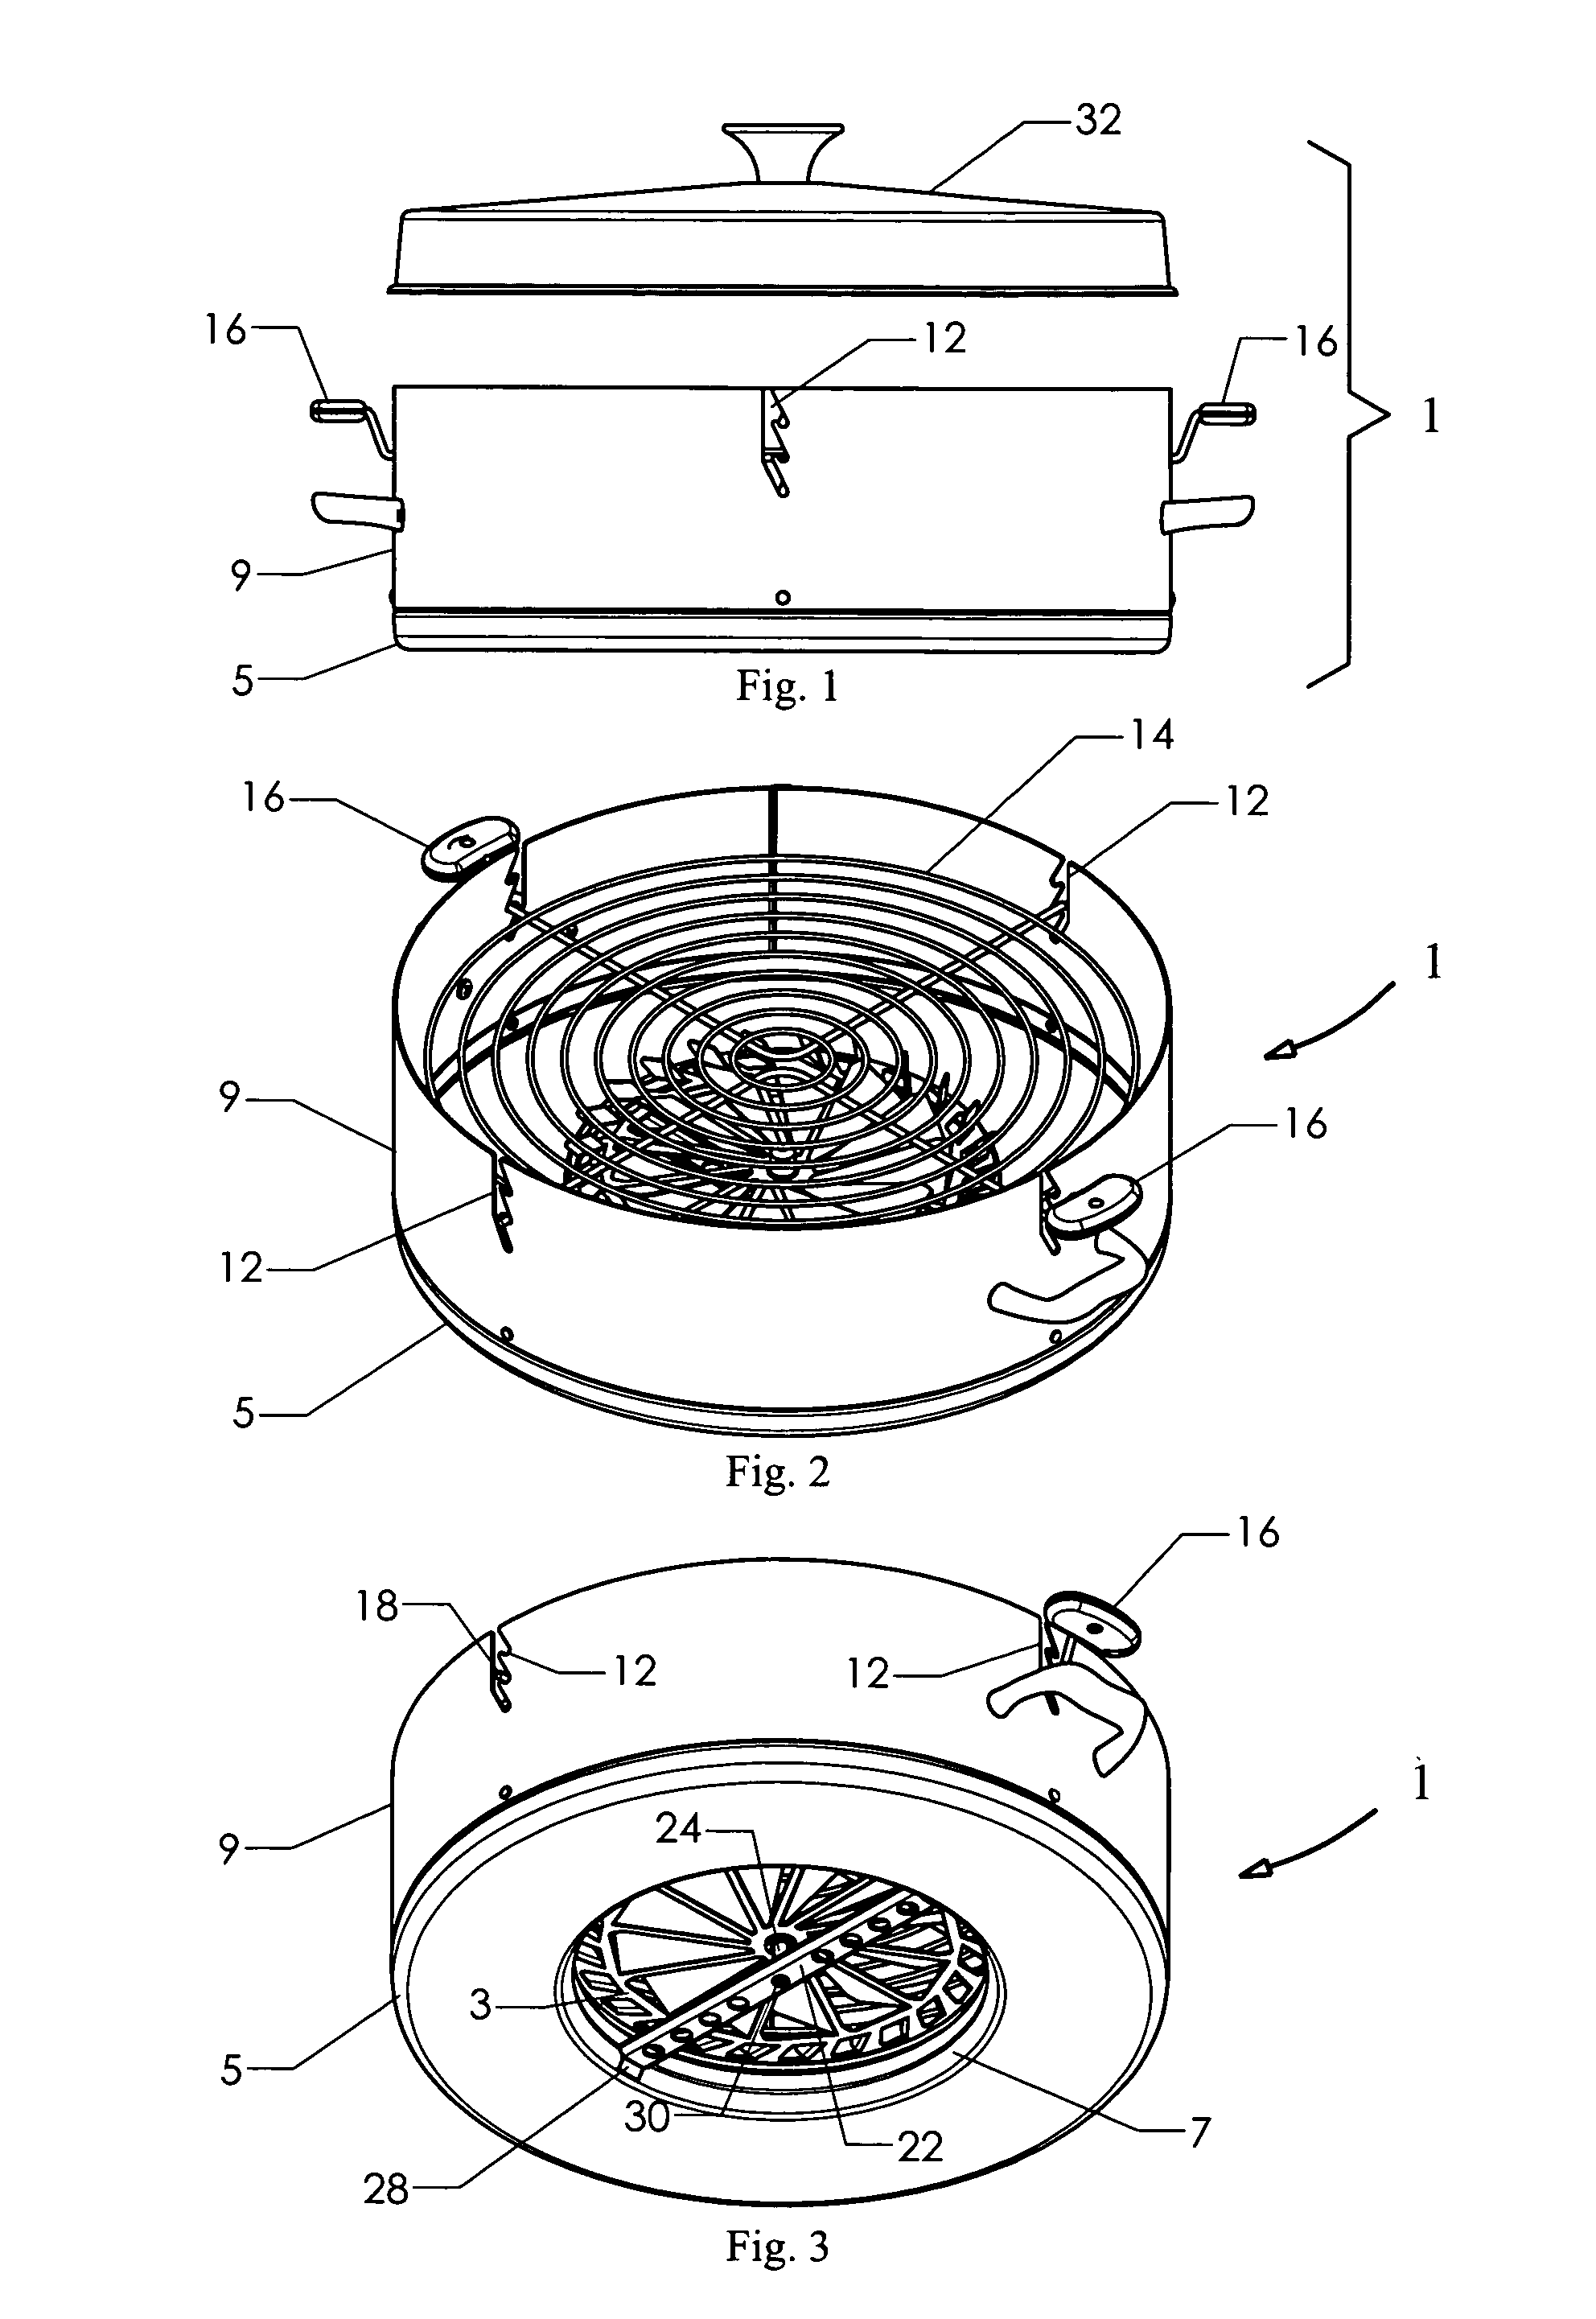 Stovetop grill having heat distributing rotor